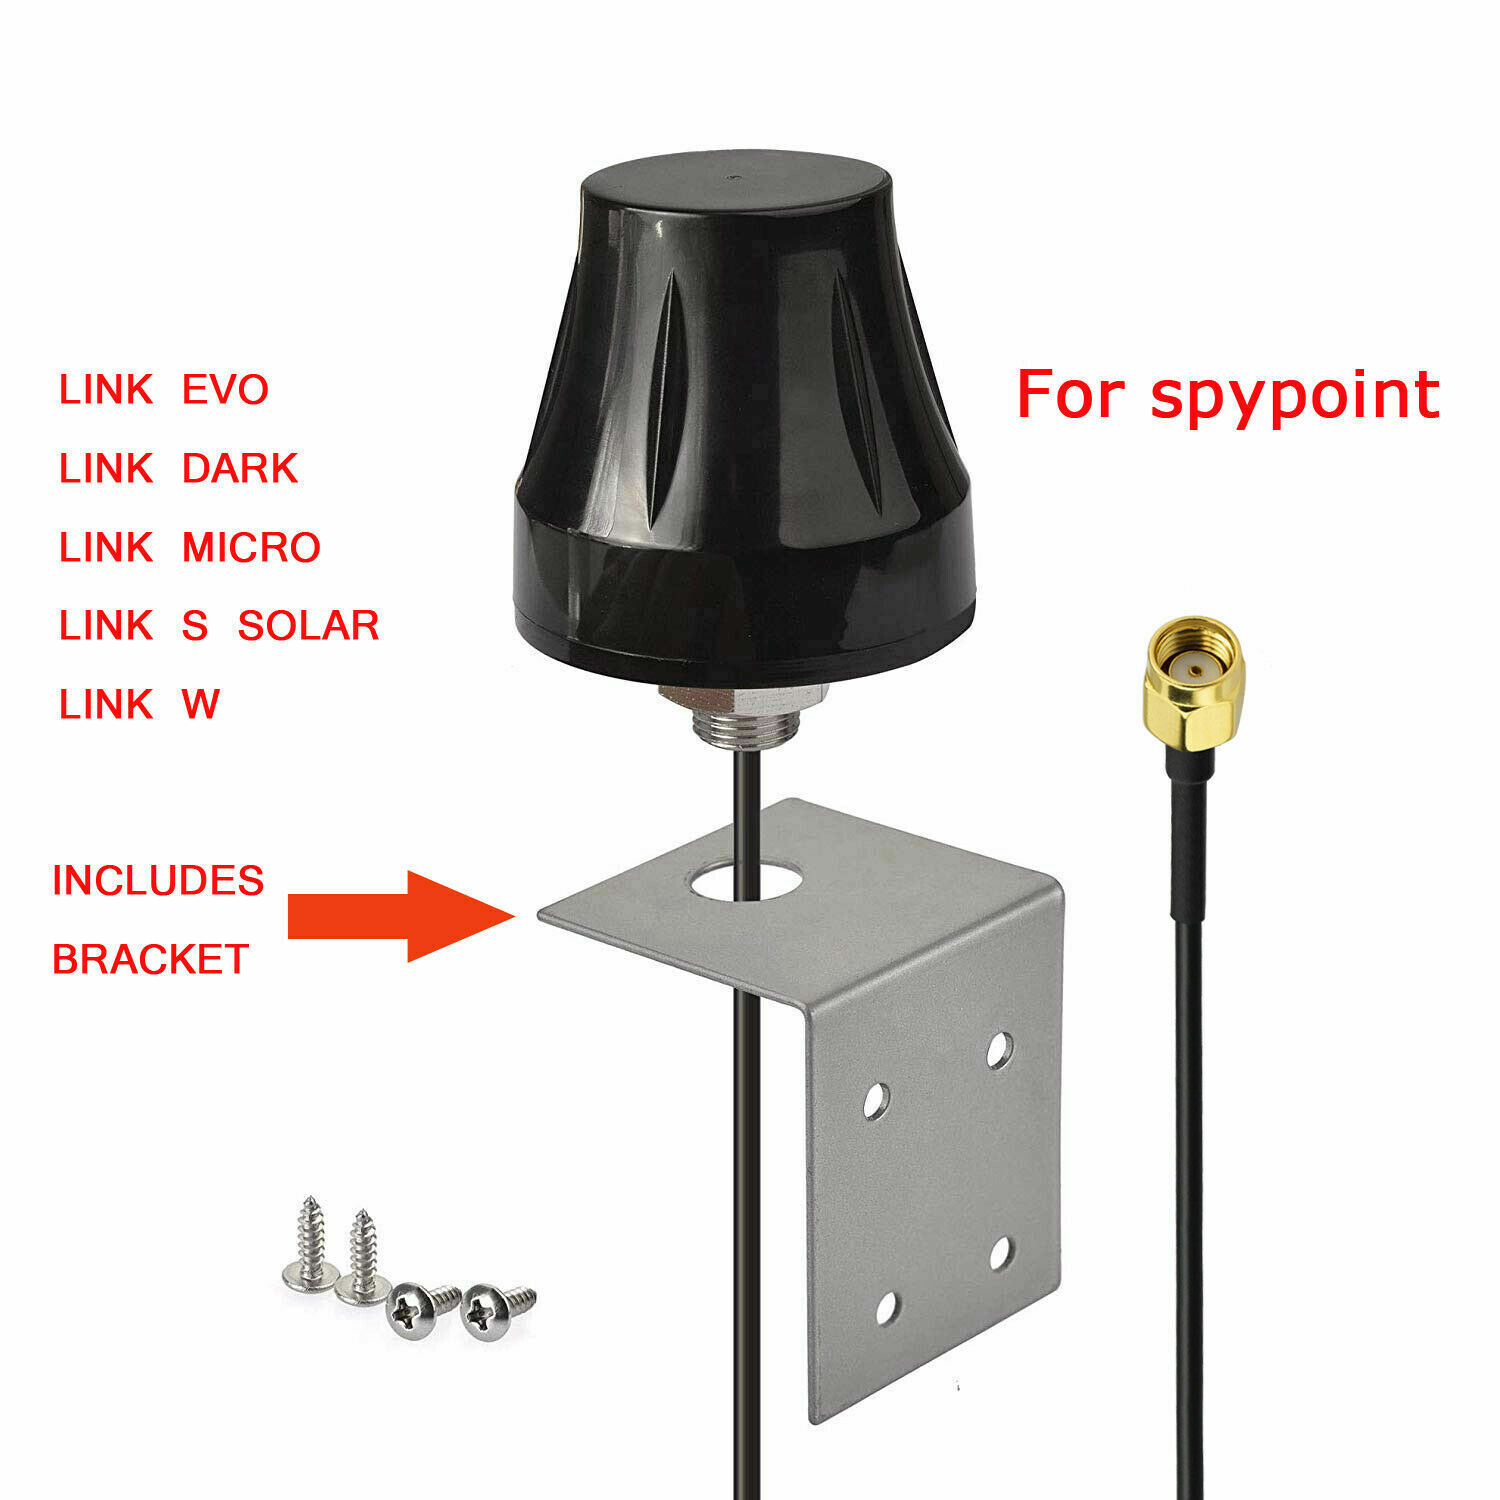 Spypoint Long Range Antenna 4G Cellular Link EVO Micro Trail Camera Outdoor 5dBi